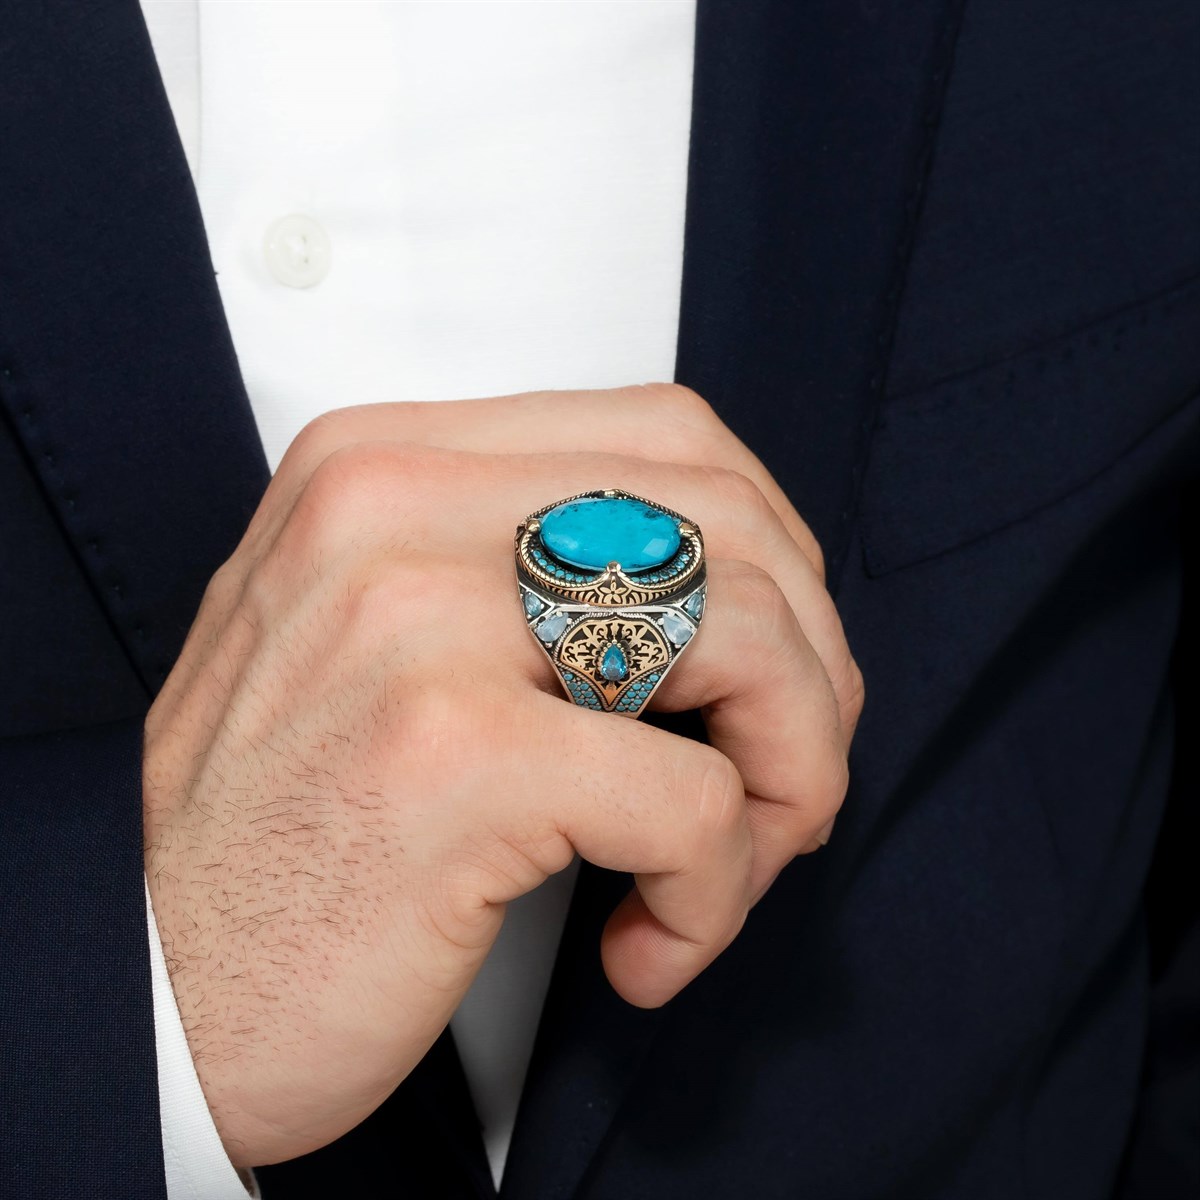 Has Aqua Stone Turquoise Decorated Silver Men's Ring